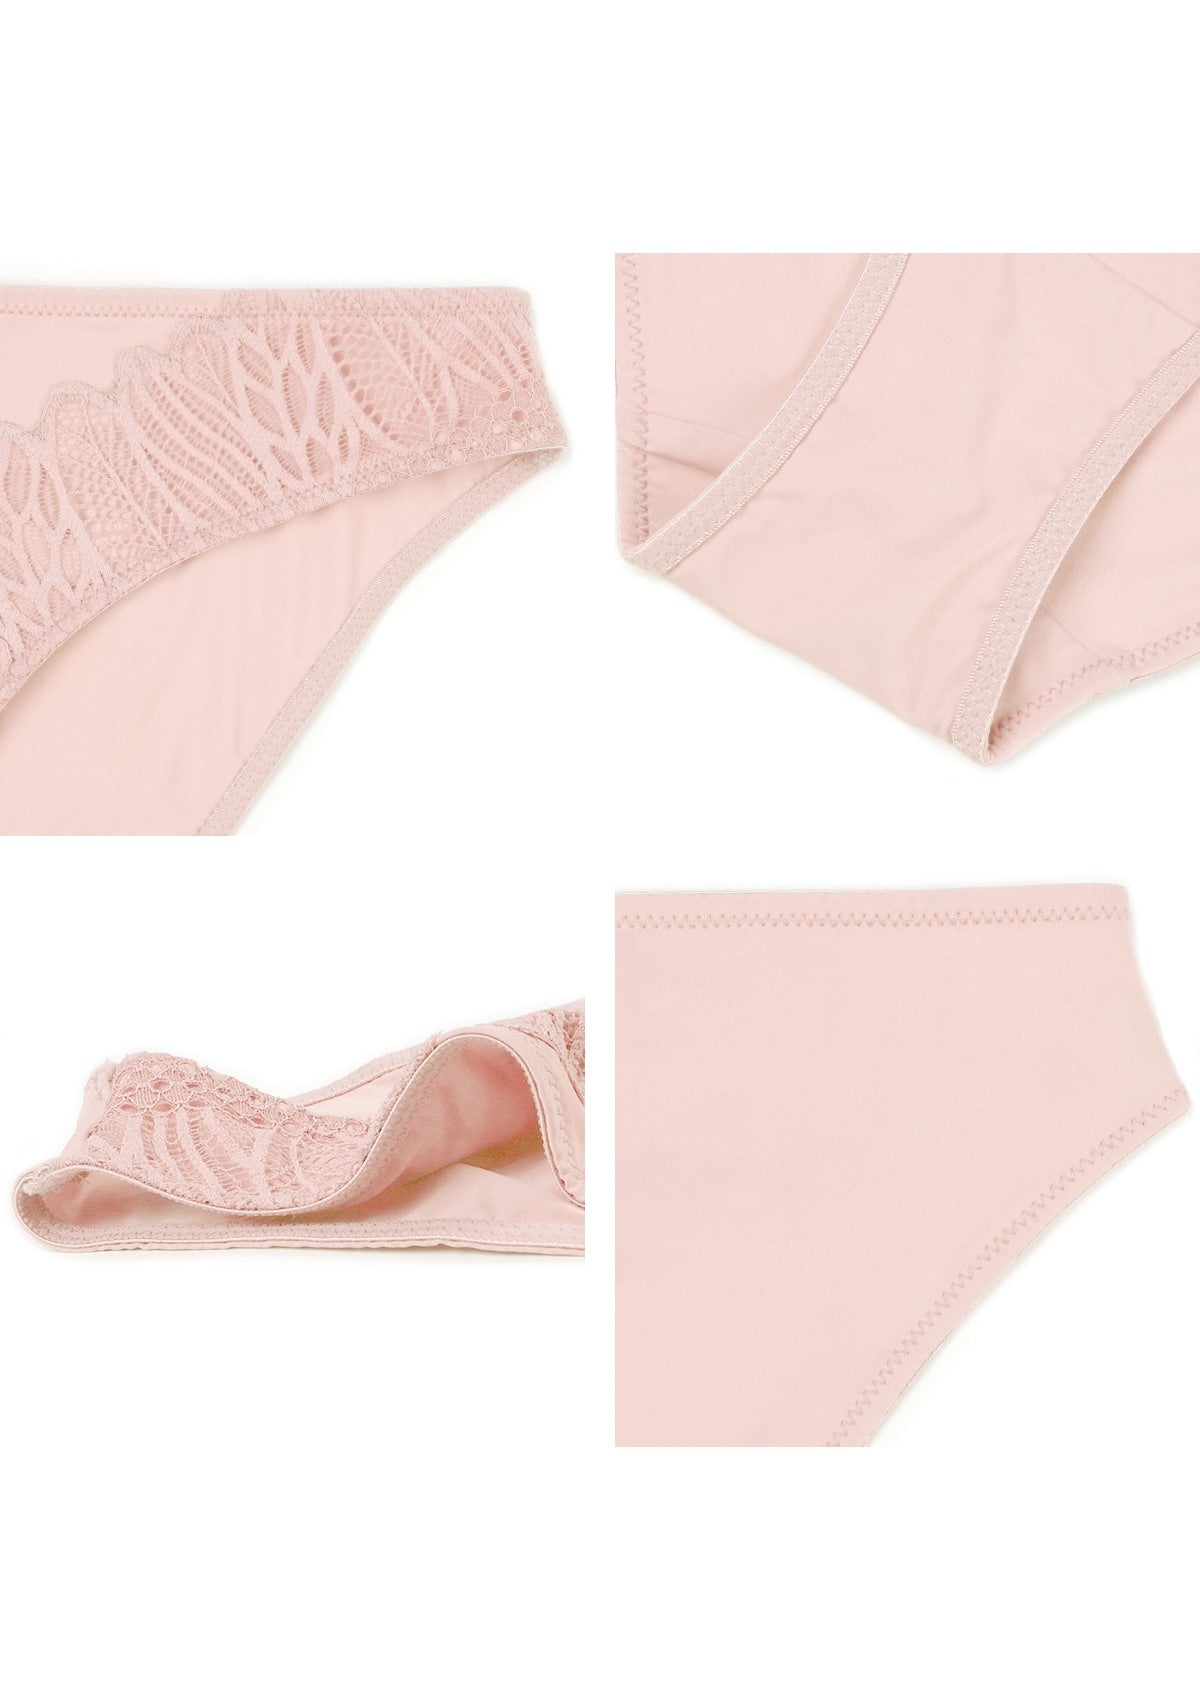 HSIA Pretty Secrets Cozy Stylish Lace Trim Feminine Modern Underwear - XL / Light Pink